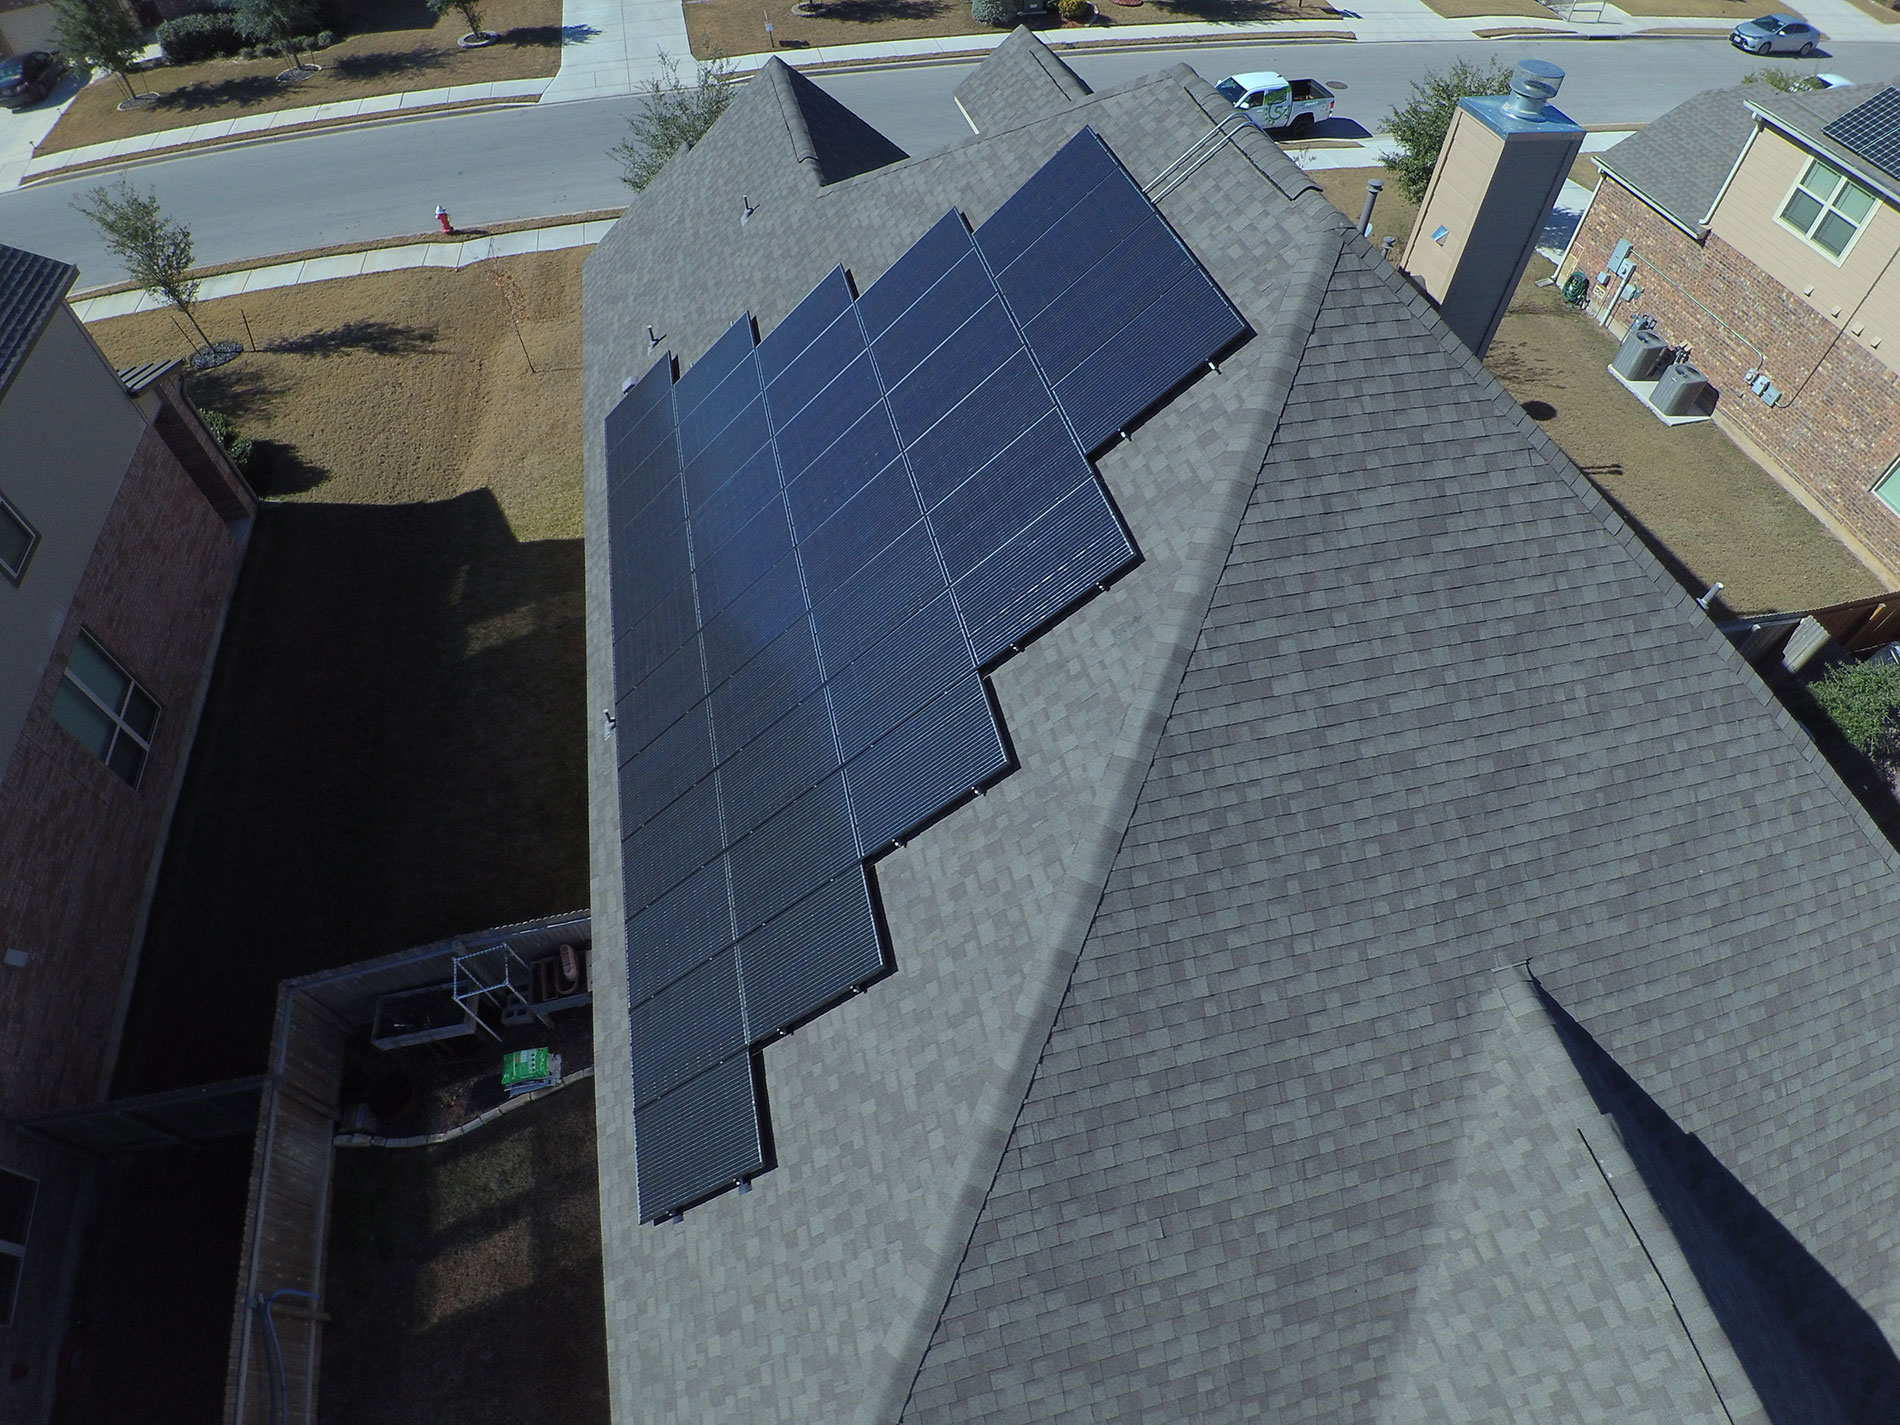 solar panels on home